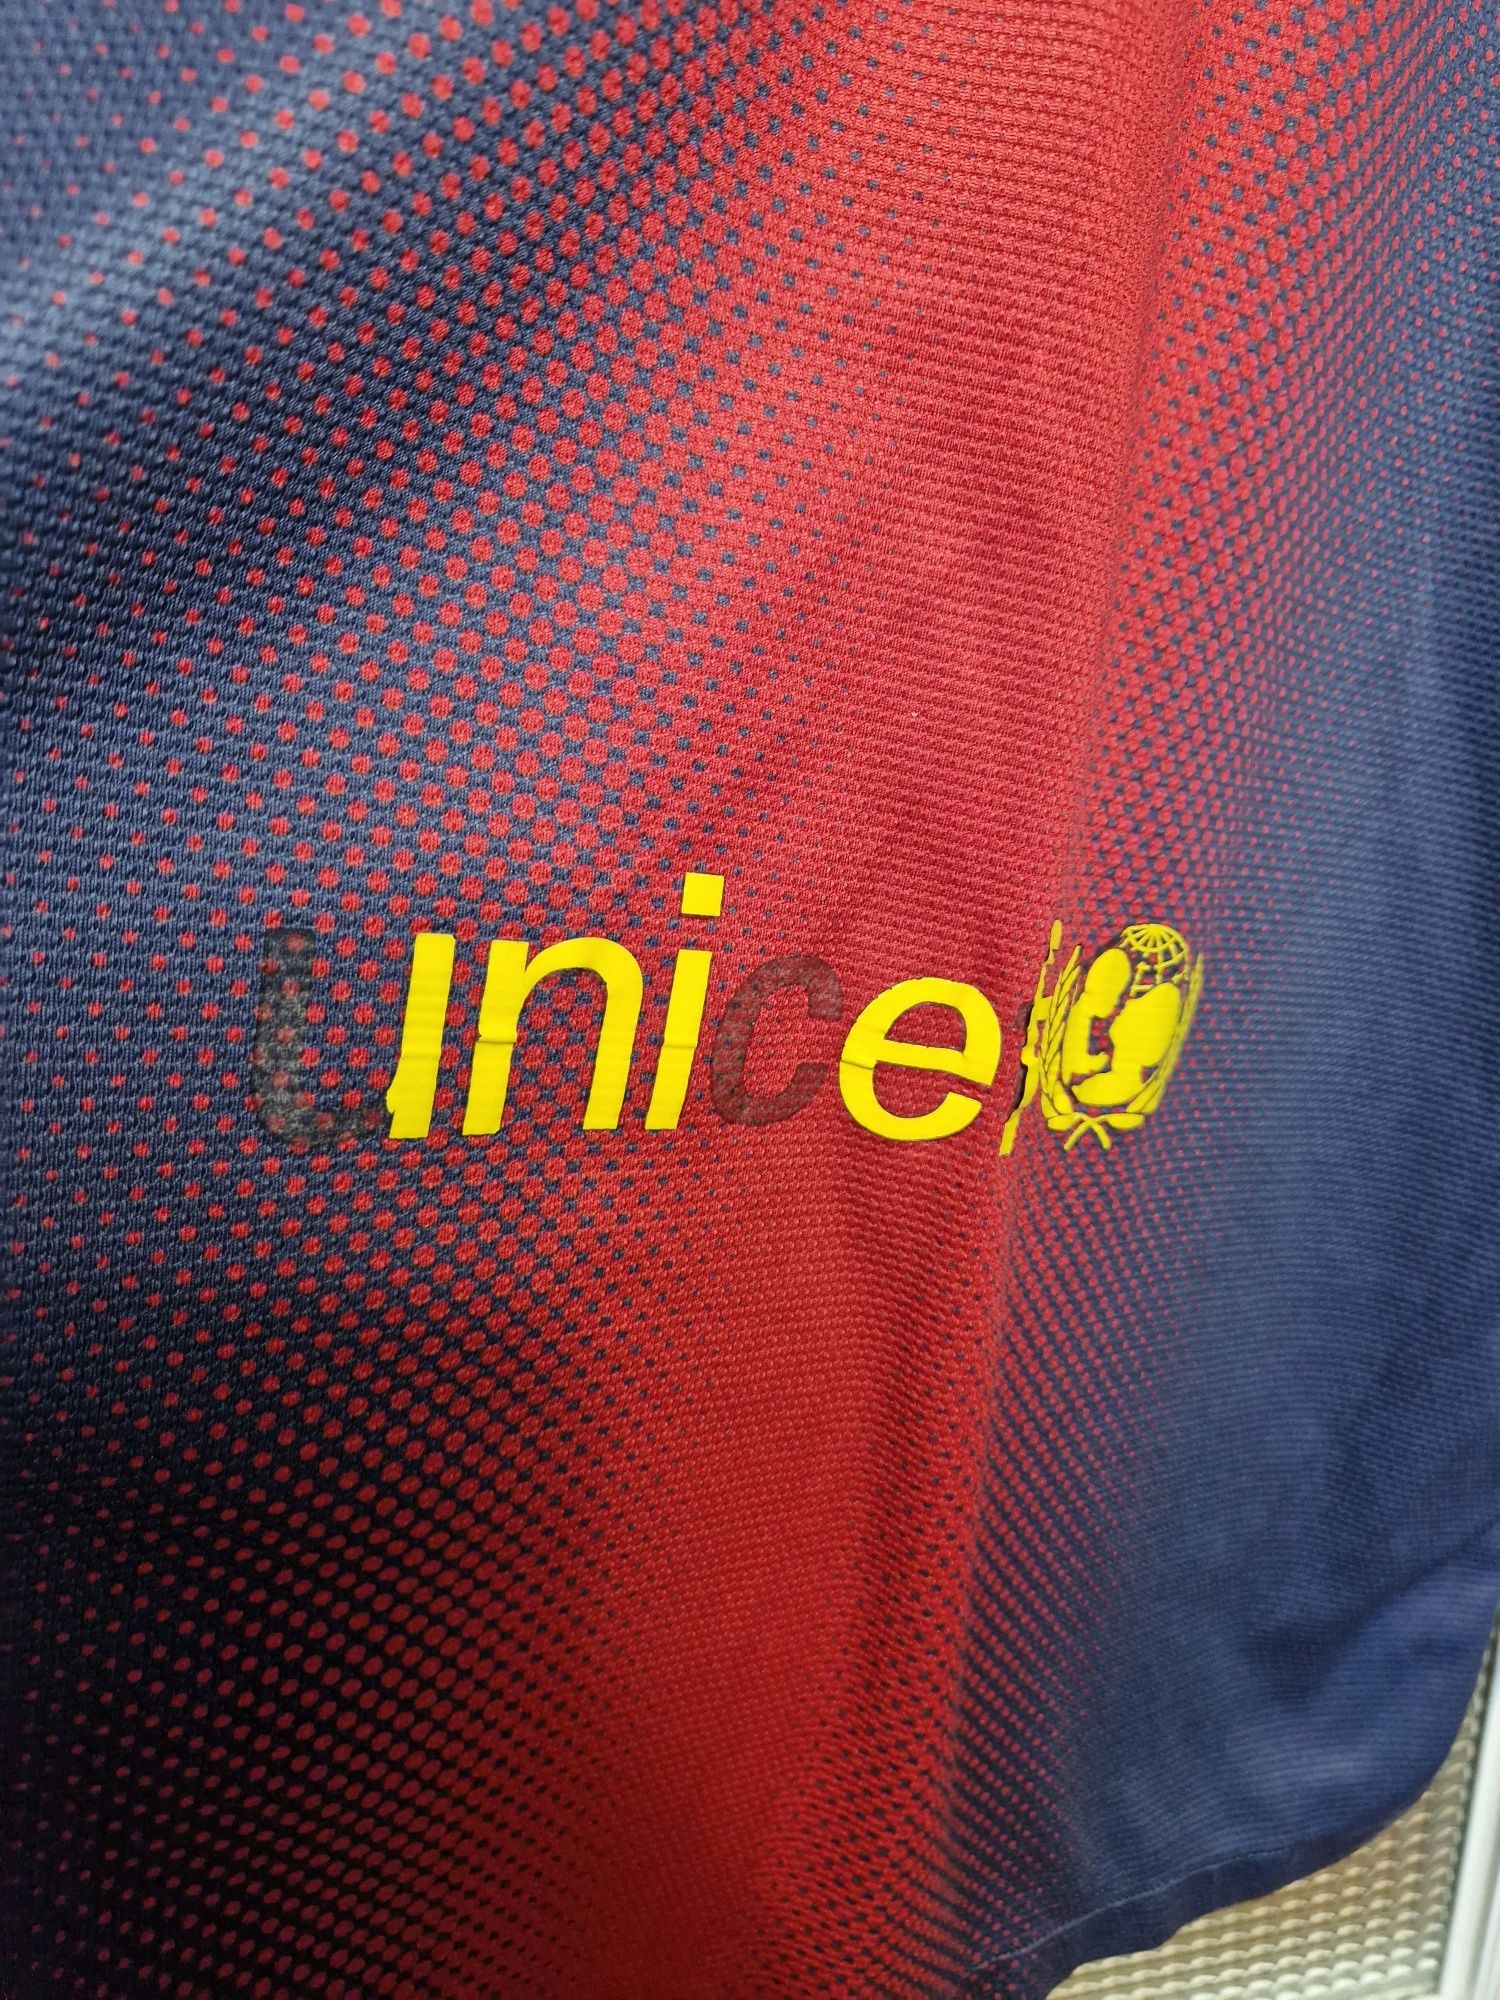 Koszulka Piłkarska Domowa Barcelona 2012/2013 Rozmiar L Orginalna
201